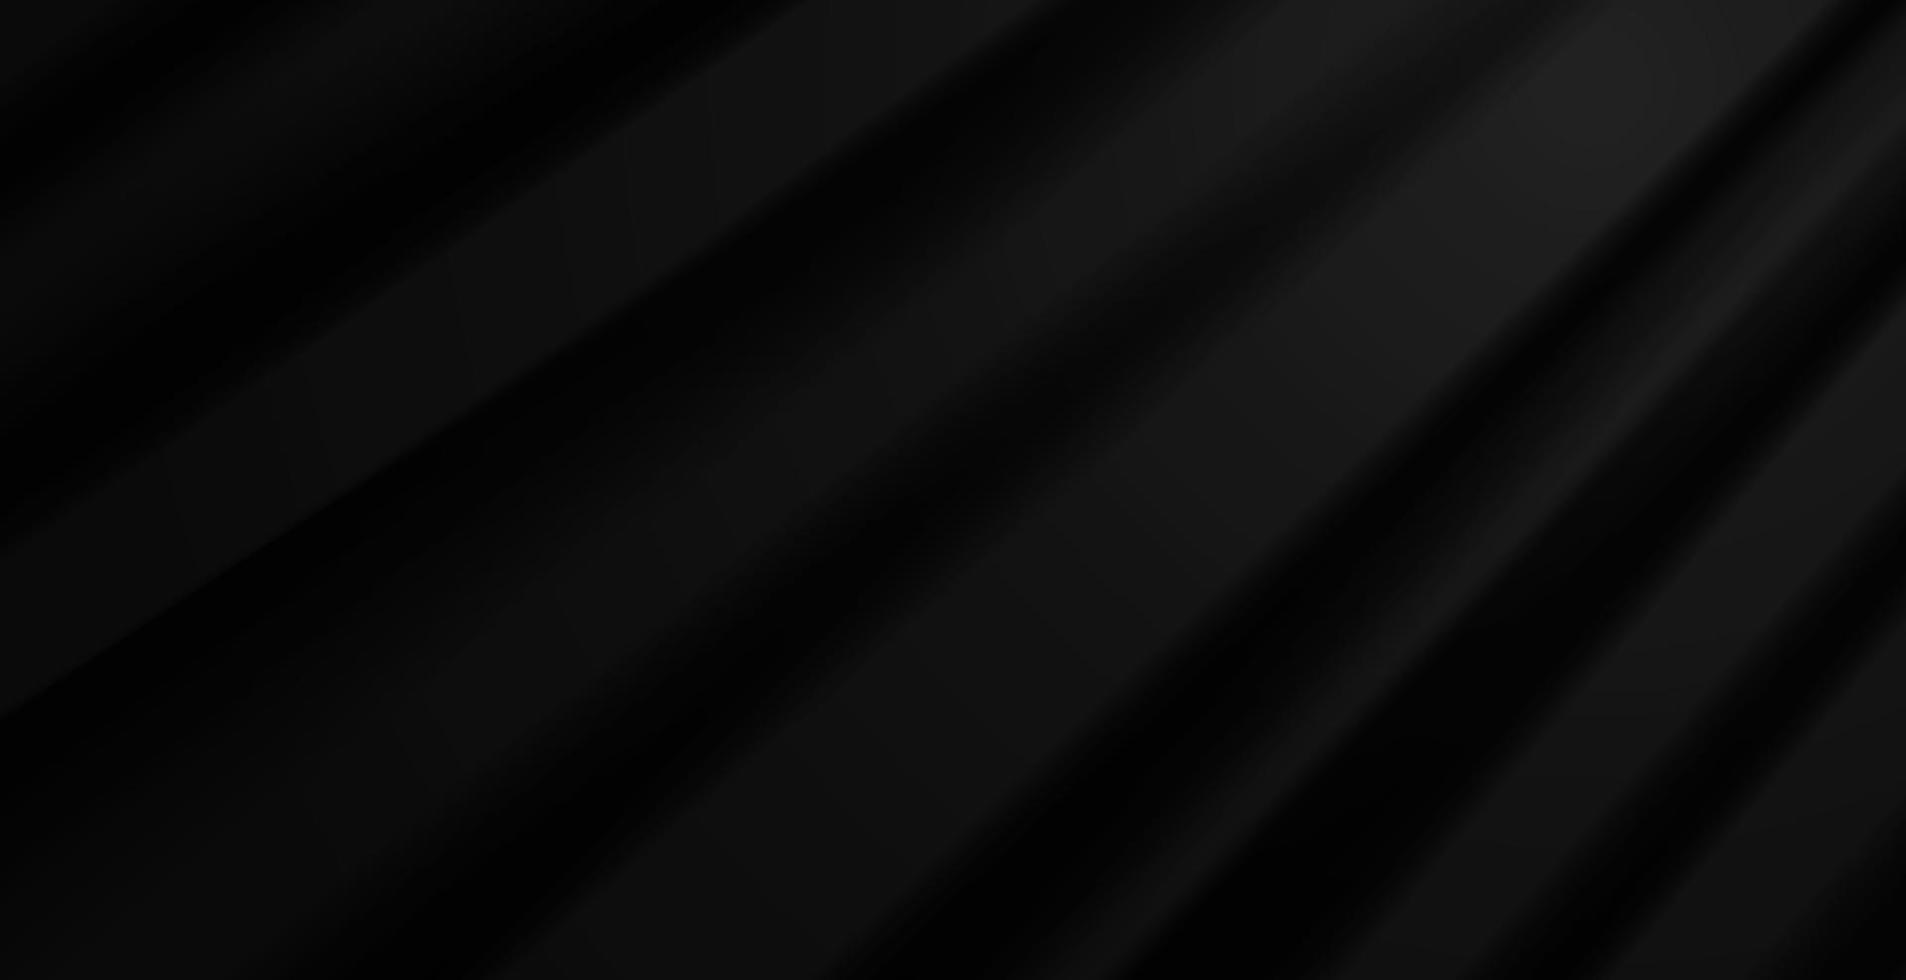 minimal black background with texture vector design, banner pattern, background concept